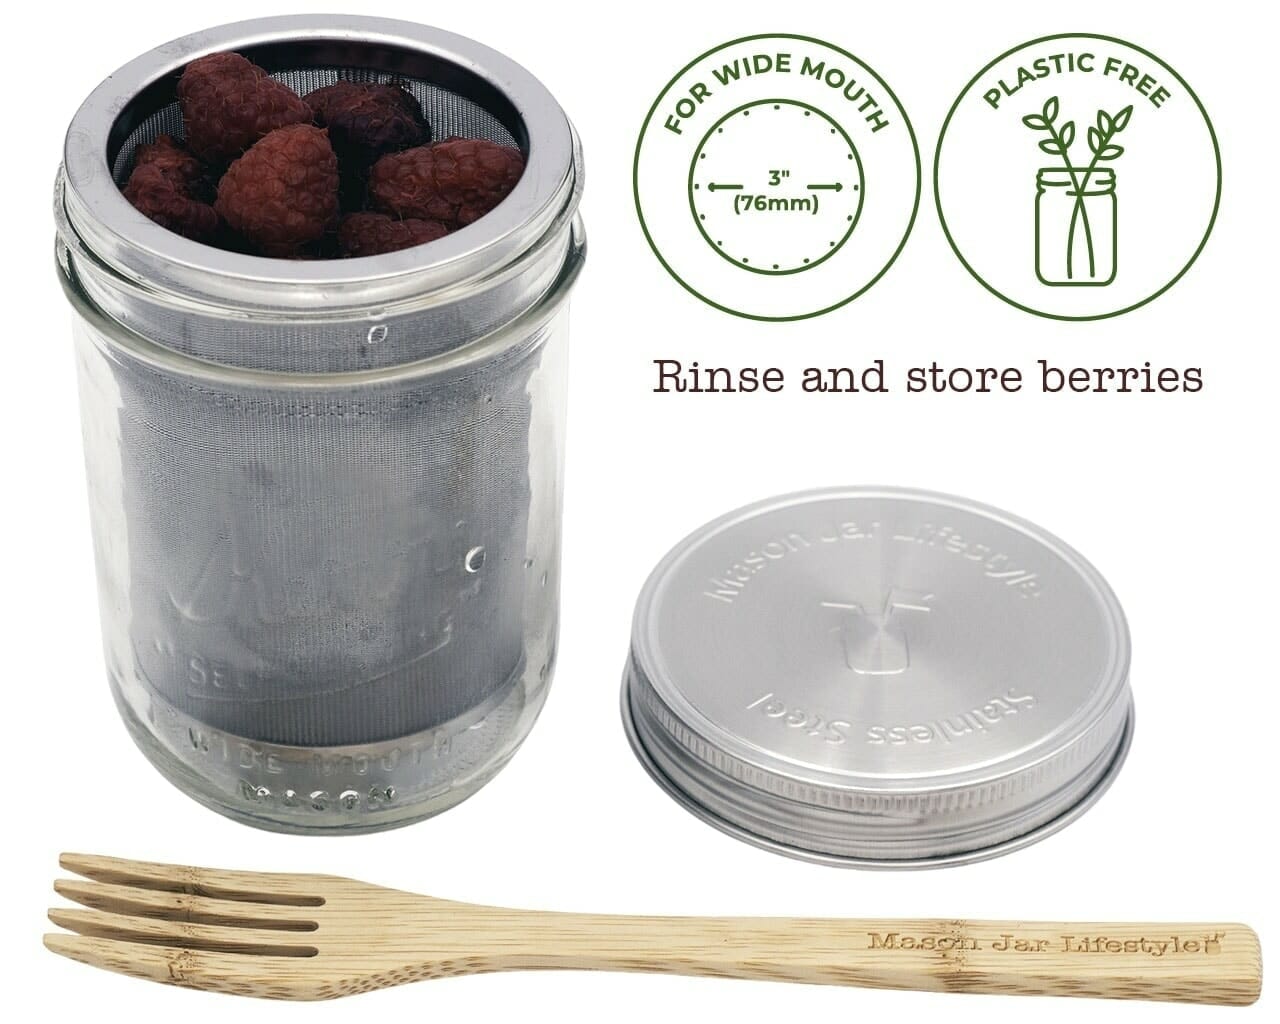 mjl-pint-16oz-cold-brew-coffee-tea-filter-maker-wide-mouth-kerr-mason-jar-rinse-berries-icons